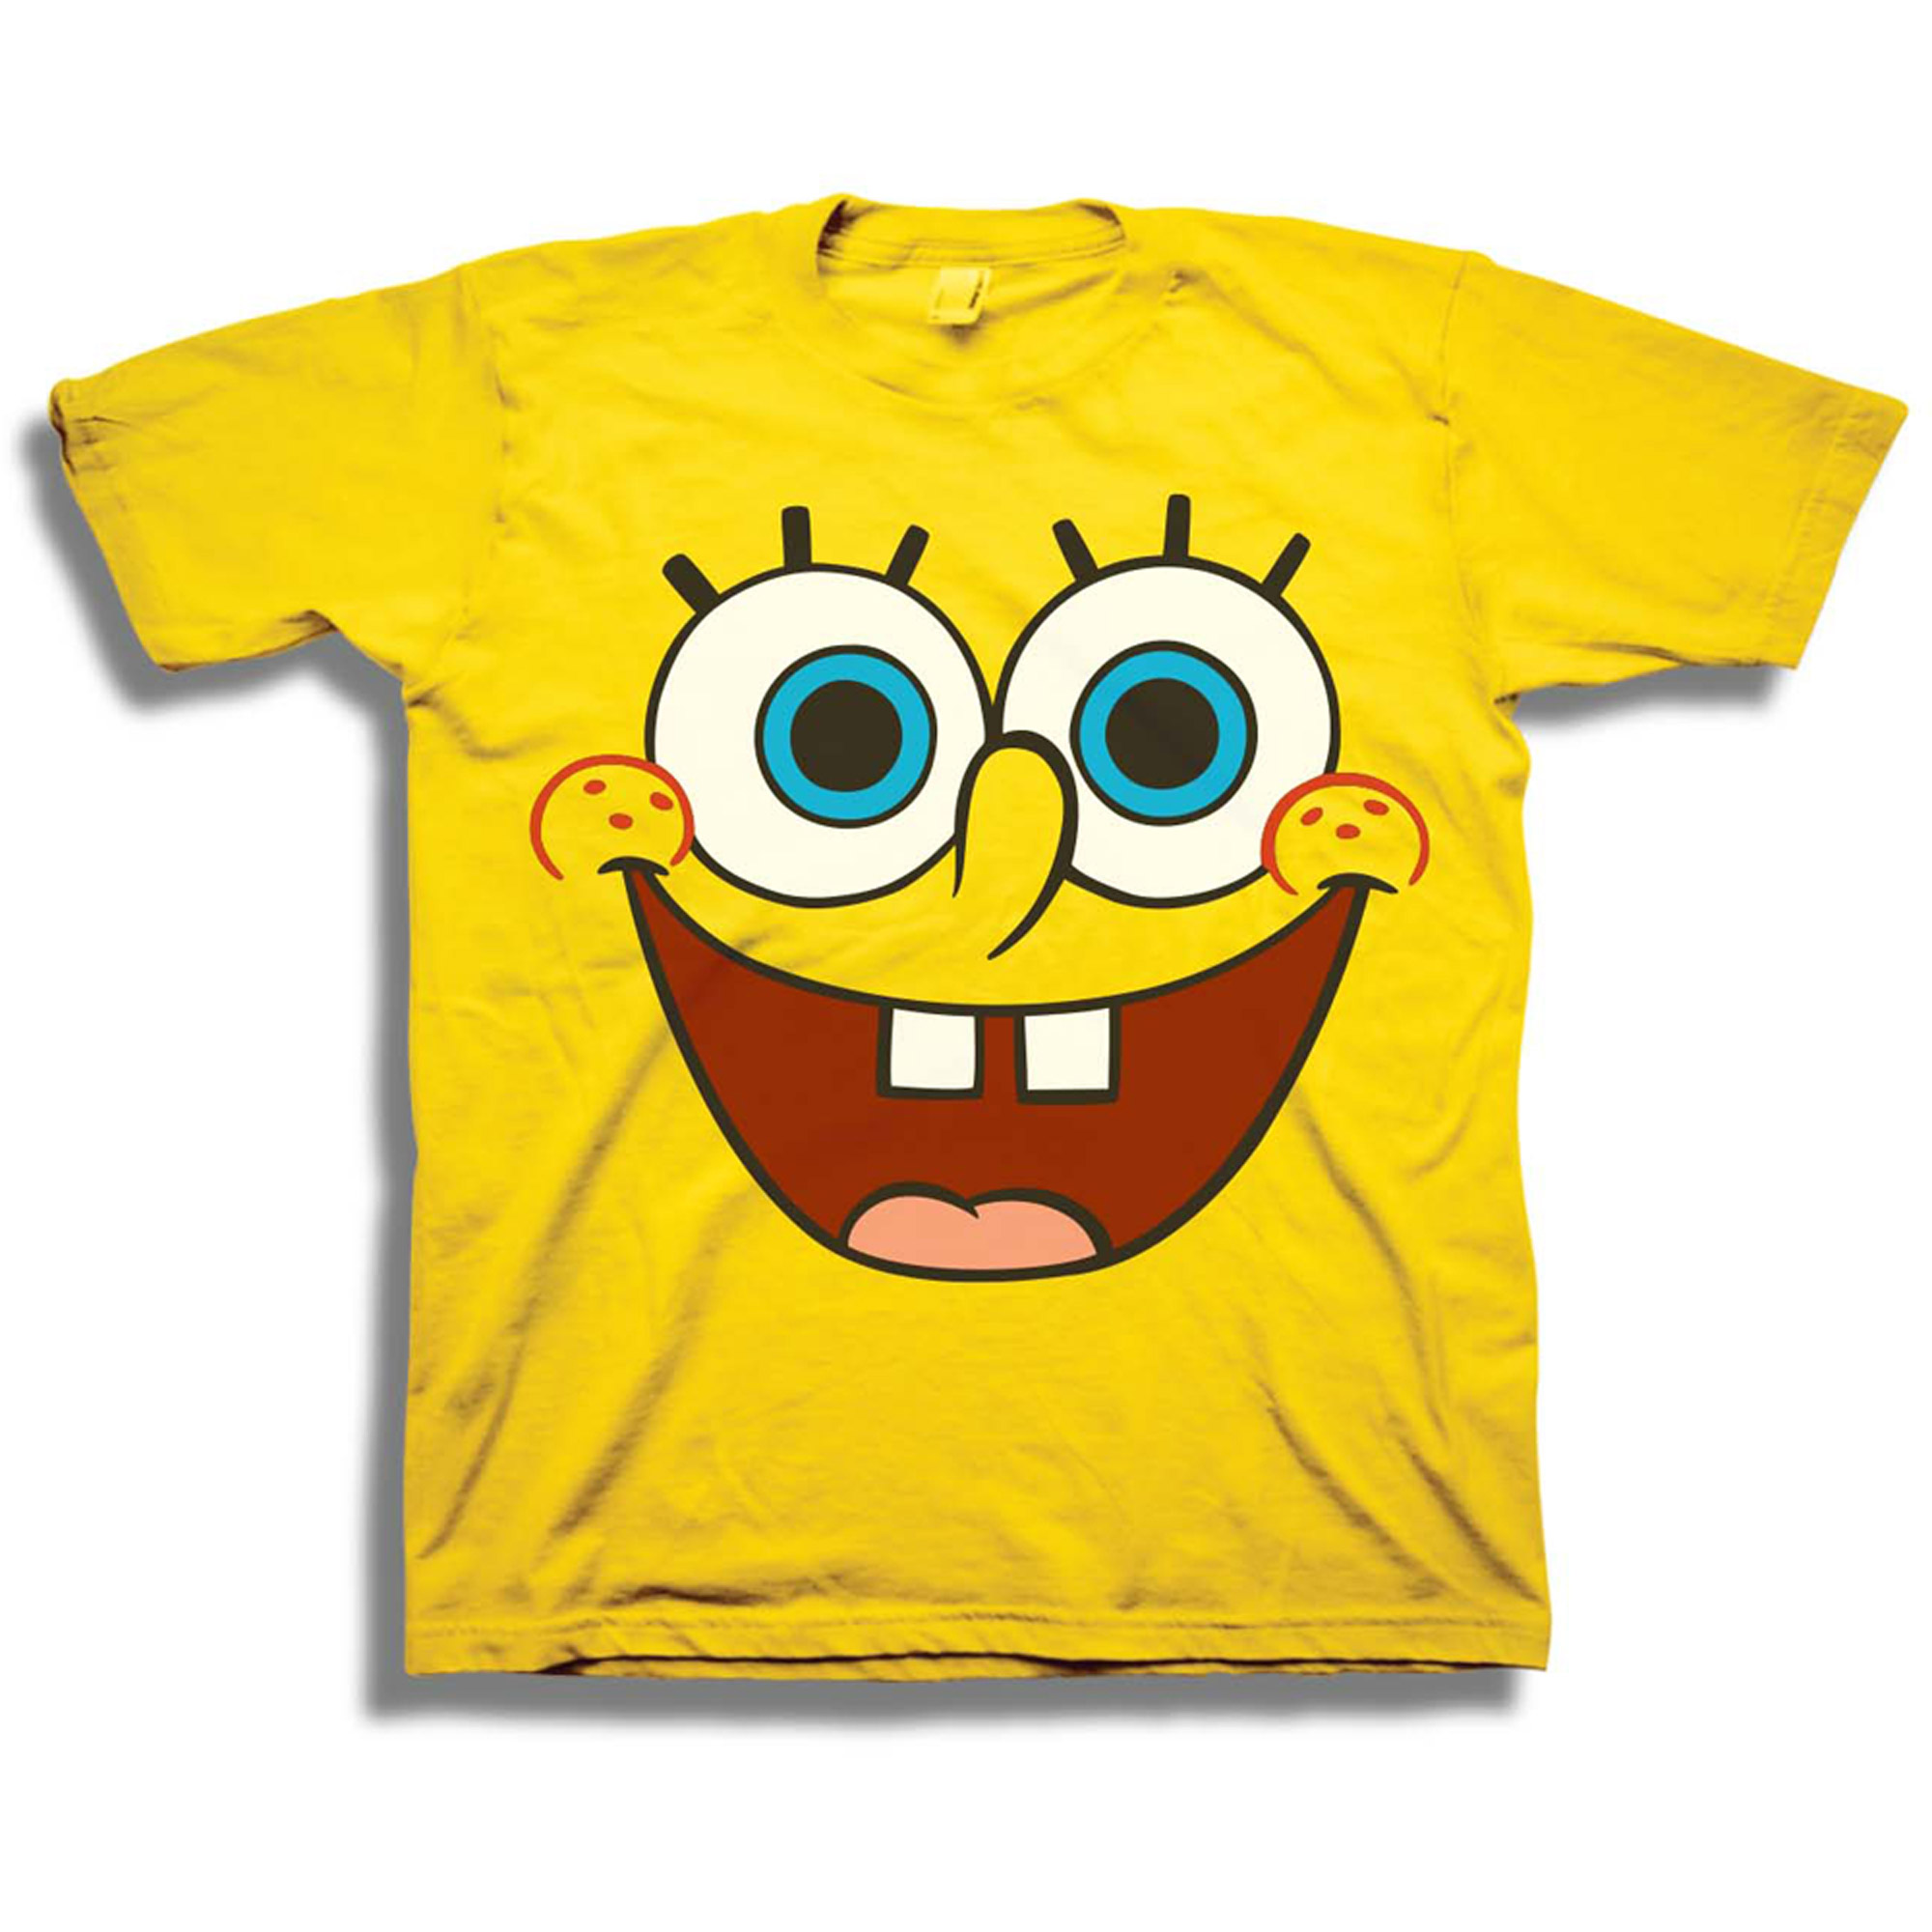 Nickelodeon Spongebob Face Toddler Boy Short Sleeve Graphic Tee - image 1 of 1